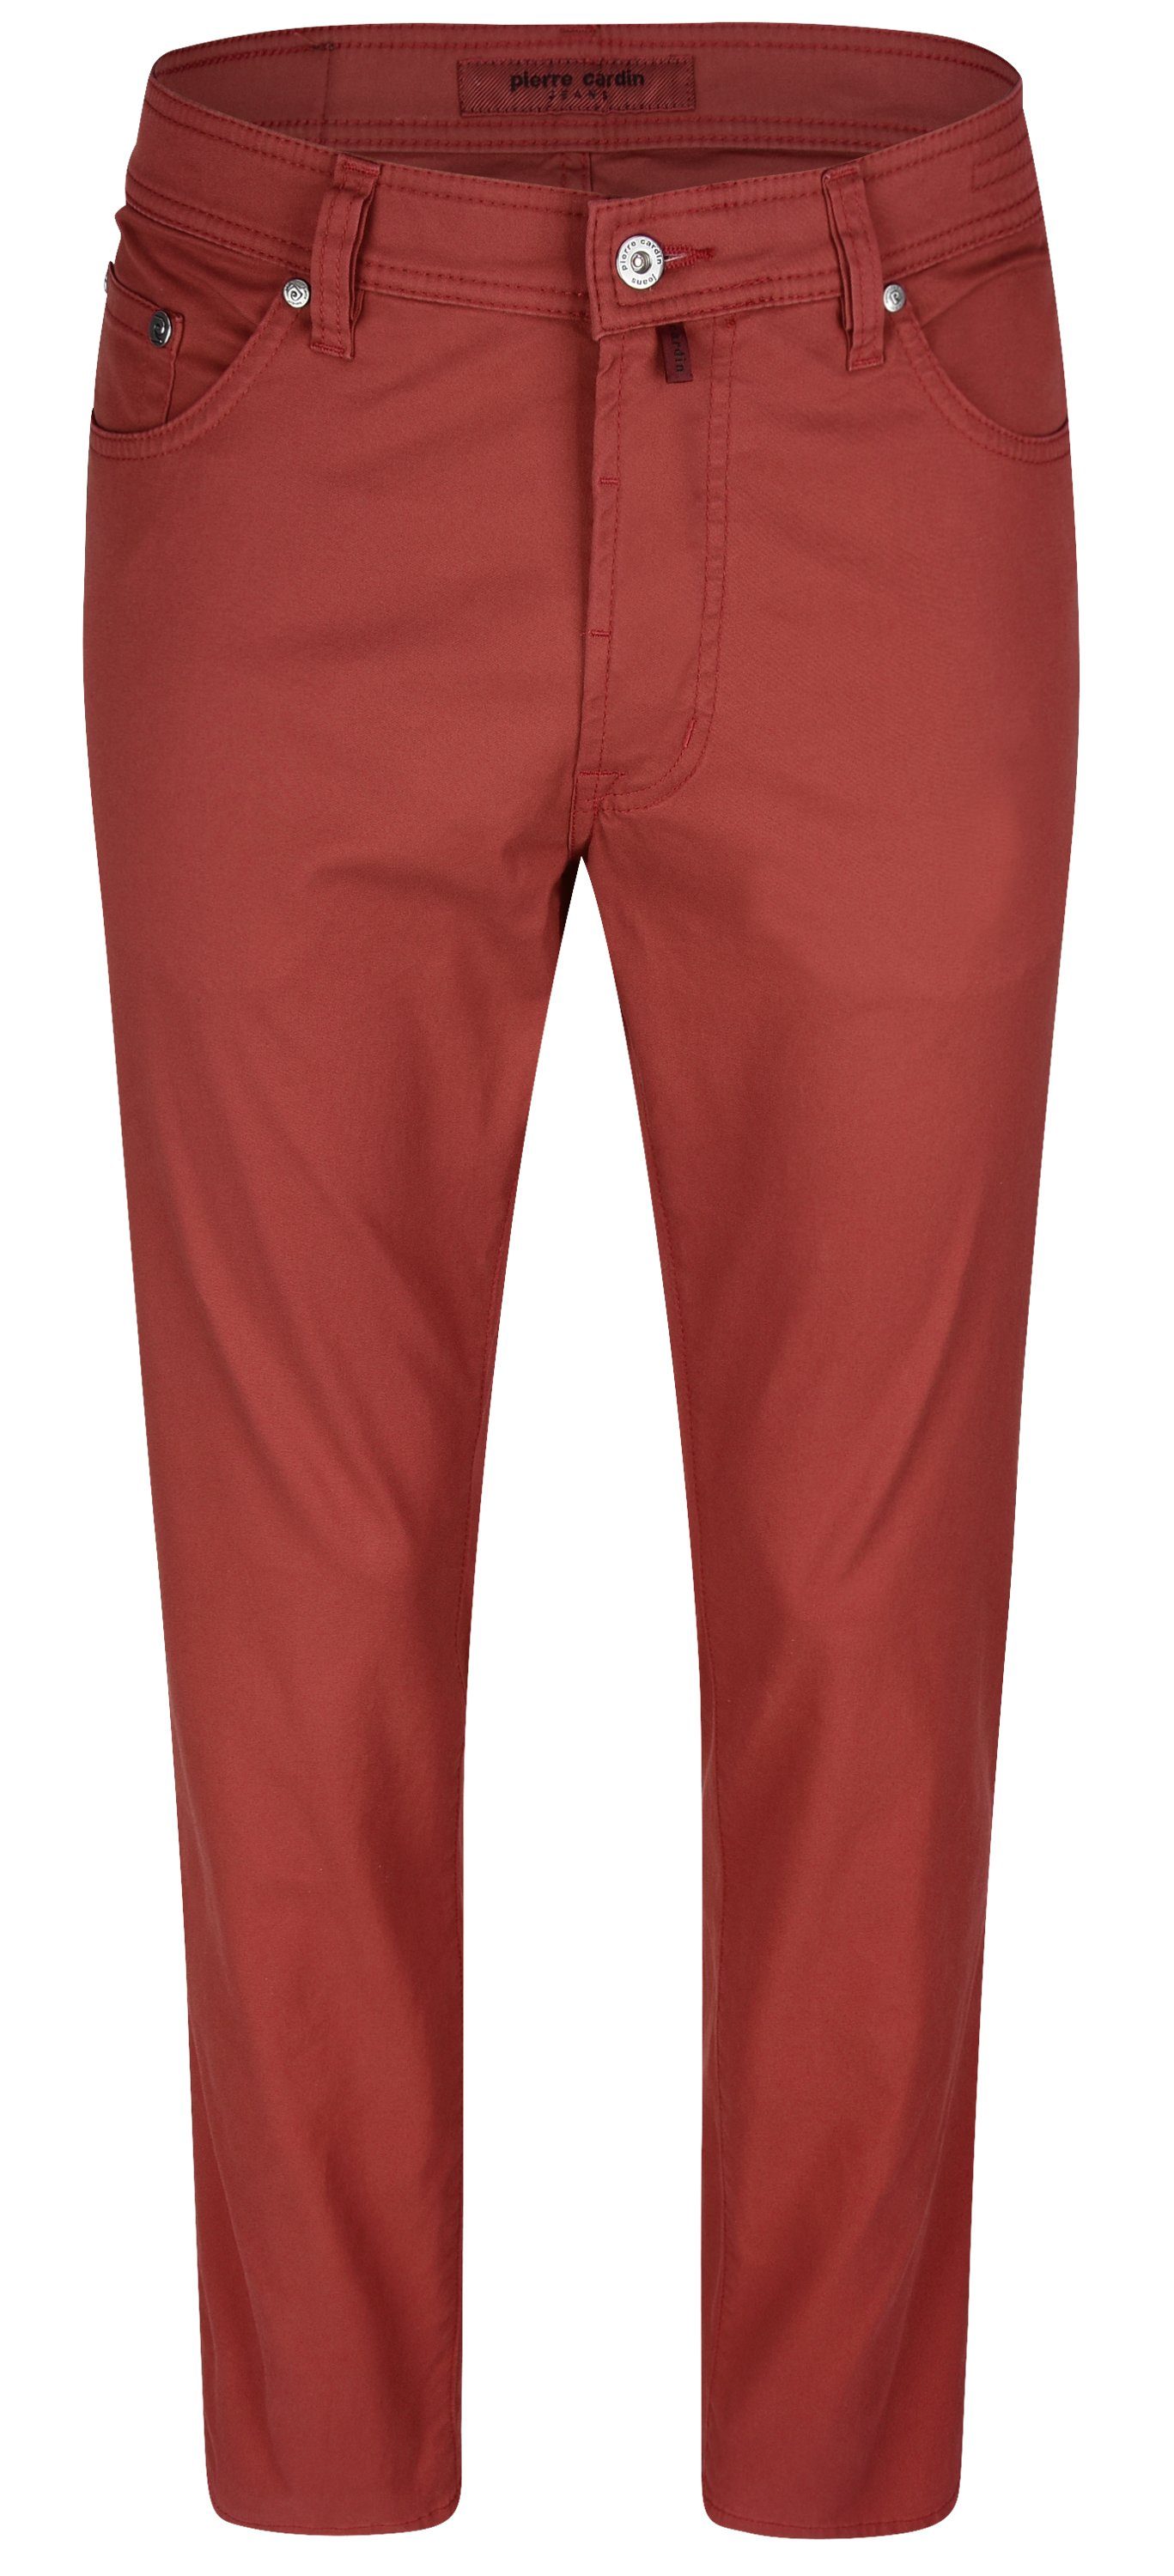 Pierre Cardin 5-Pocket-Jeans PIERRE CARDIN DEAUVILLE summer air touch popeline red 3196 250.92 -